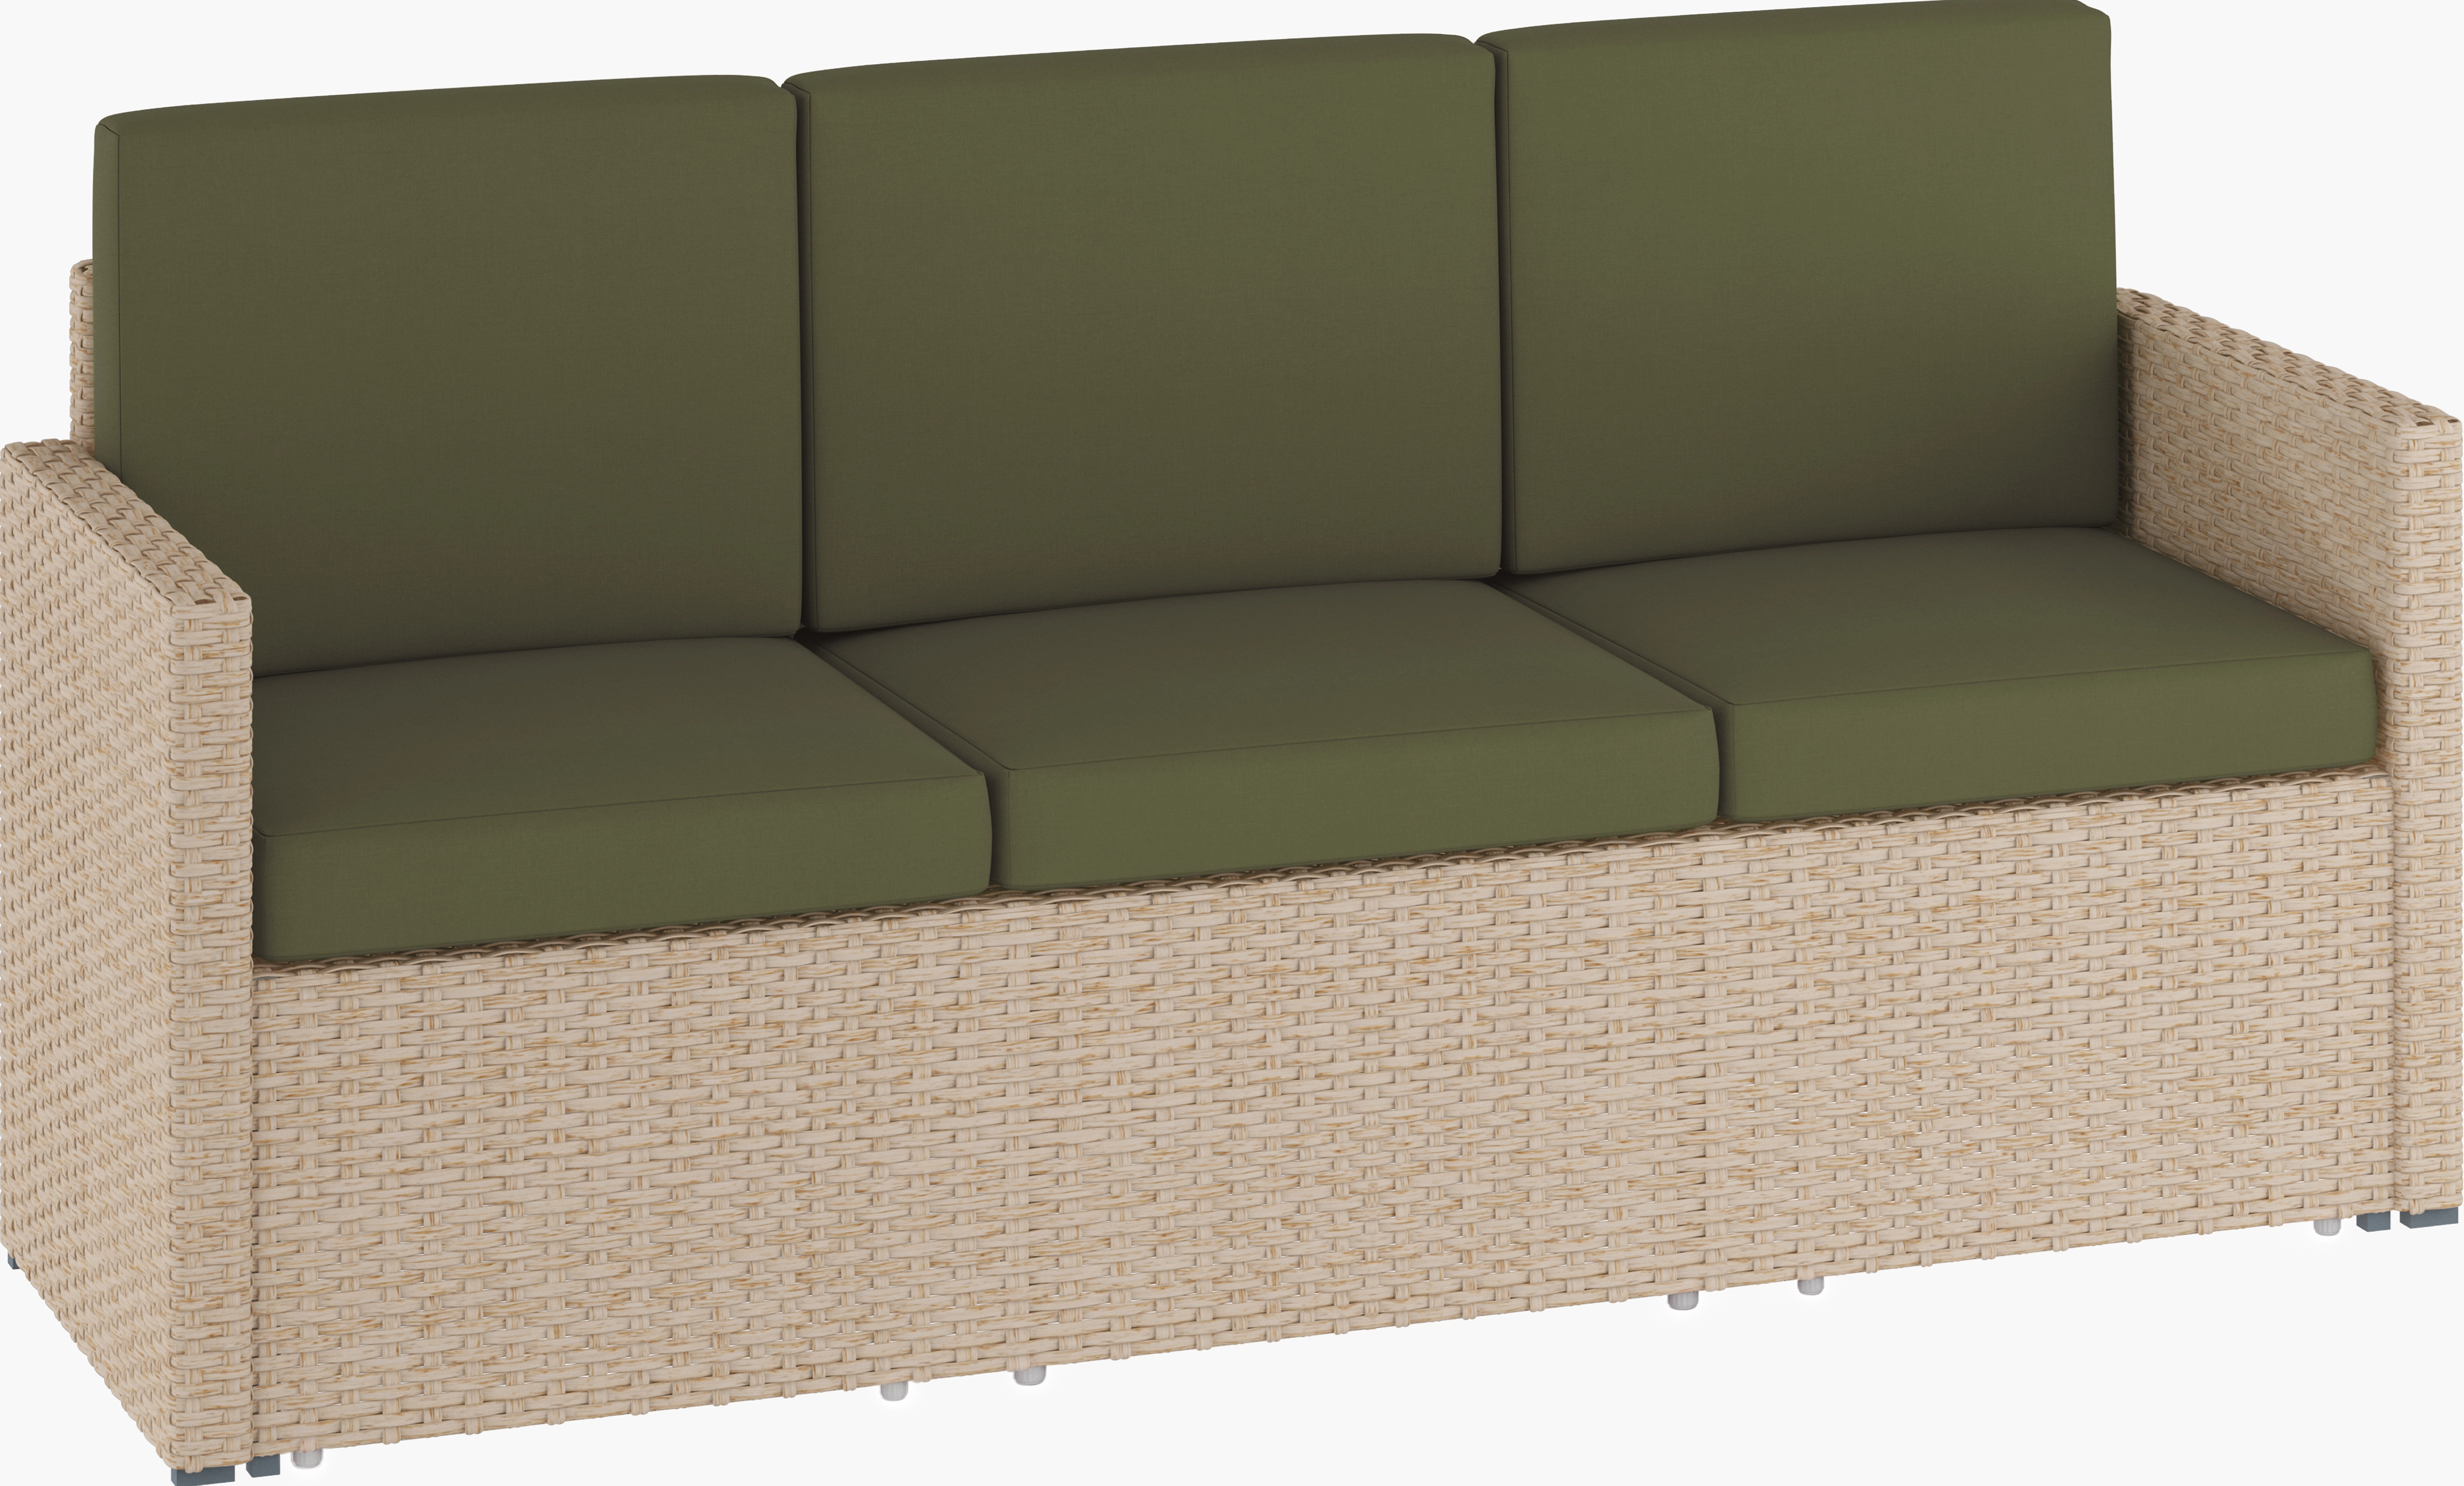 Lounge-Set Vamo 4-teilig Polyrattan Beige kaufen bei OBI